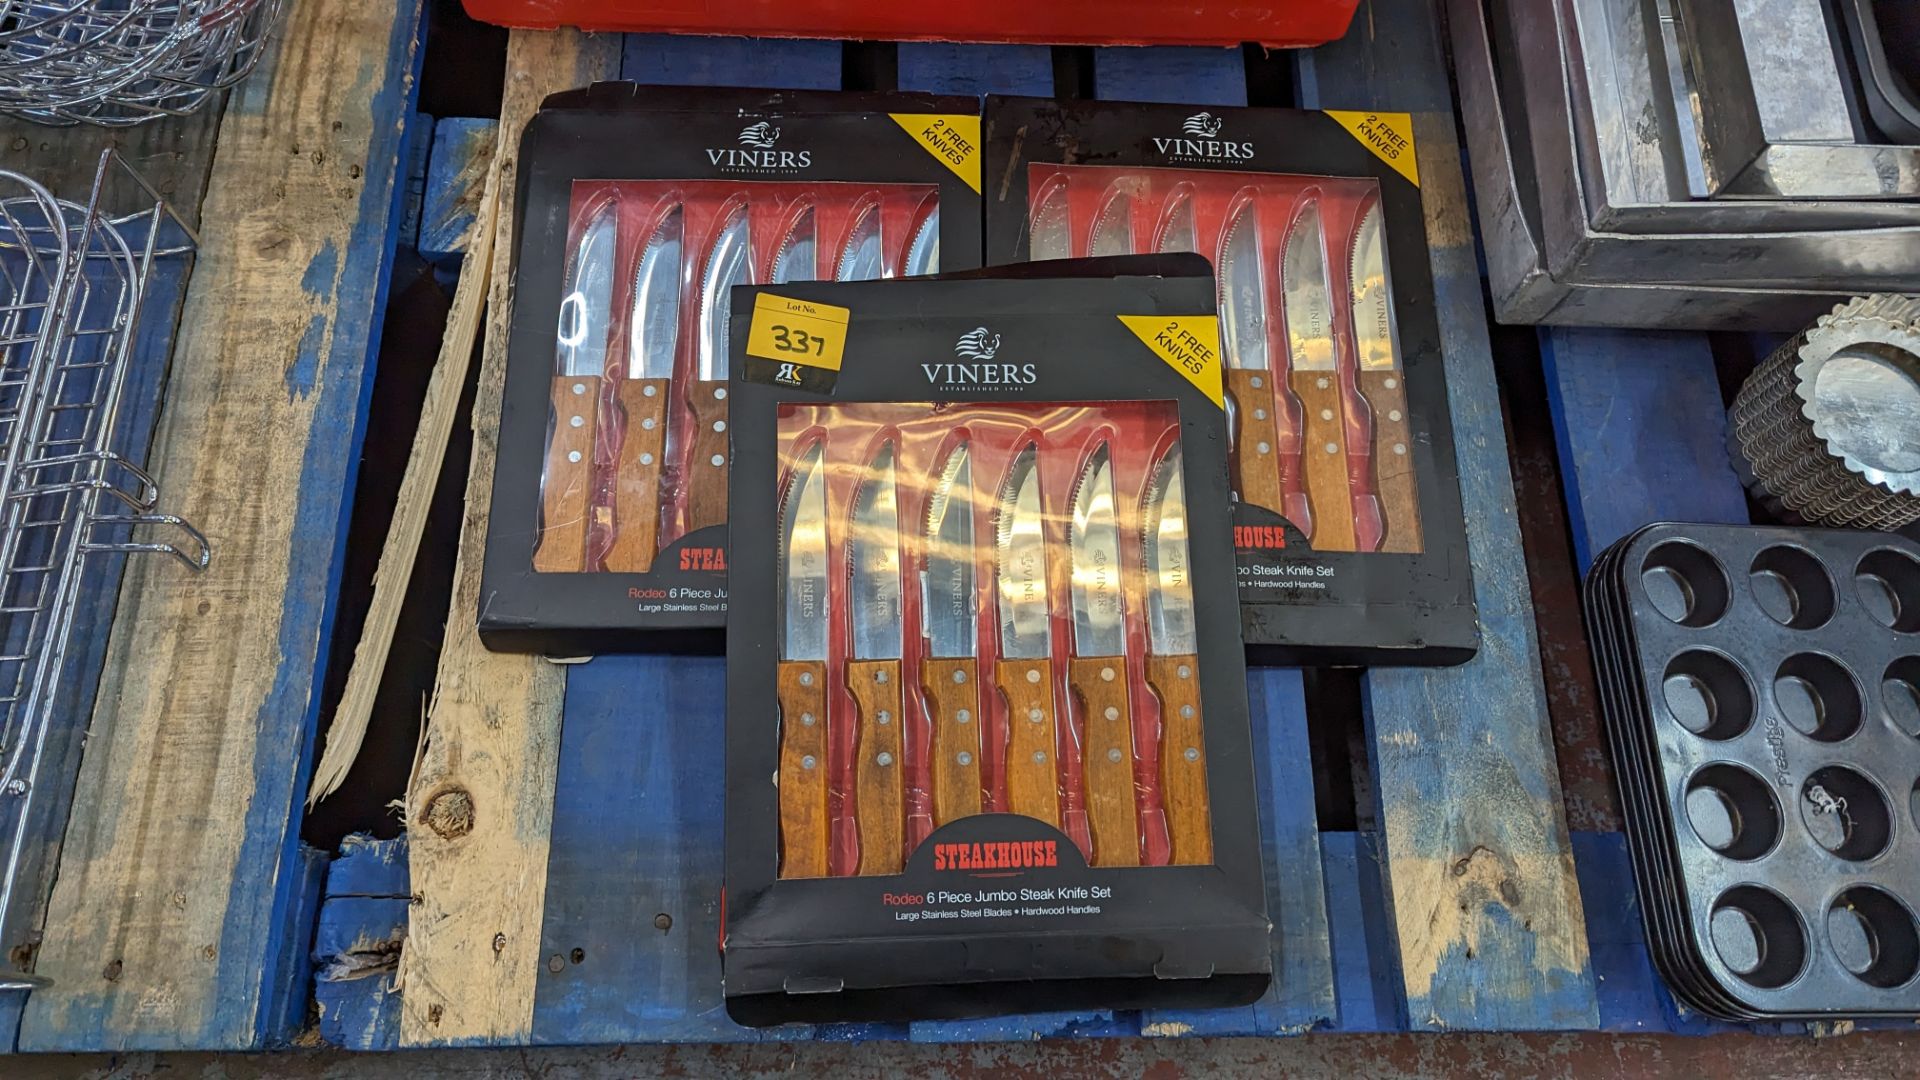 3 sets of Viners steakhouse jumbo steak knives - 18 knives in total